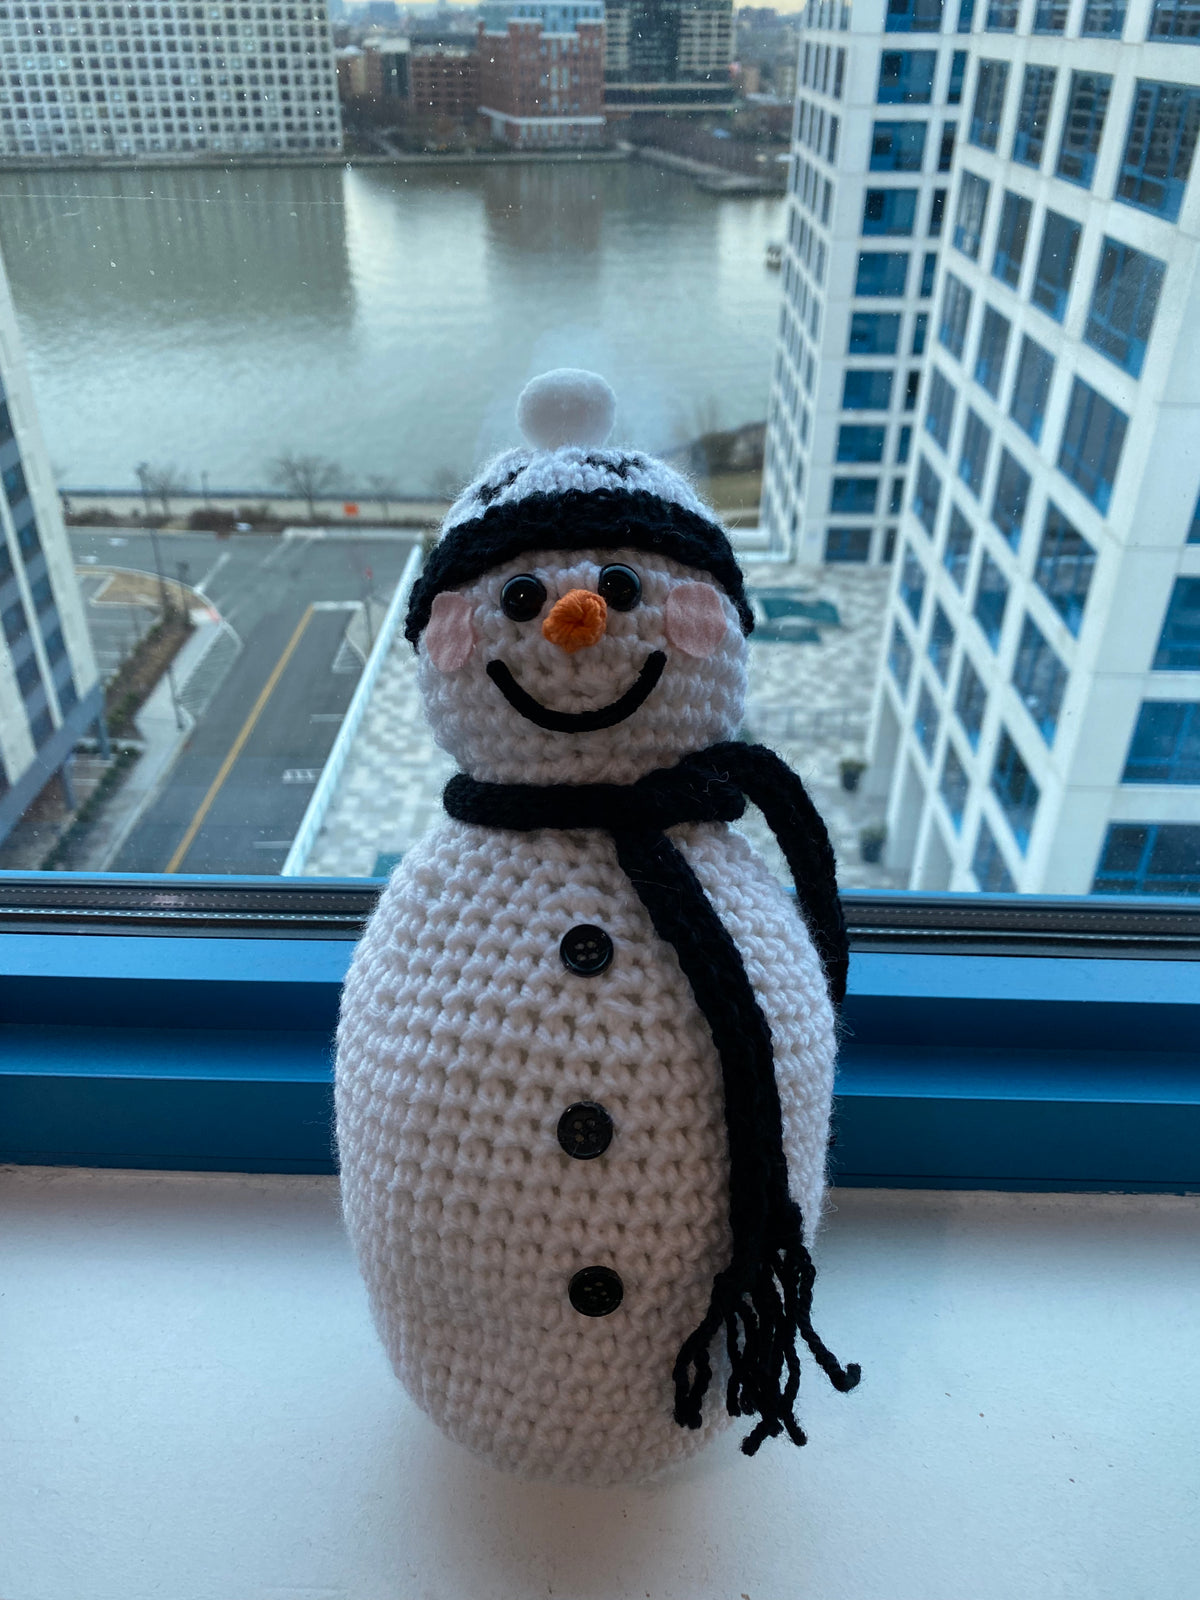 Cute crocheted snowman with white beanie featuring Black hearts and a plain black scarf